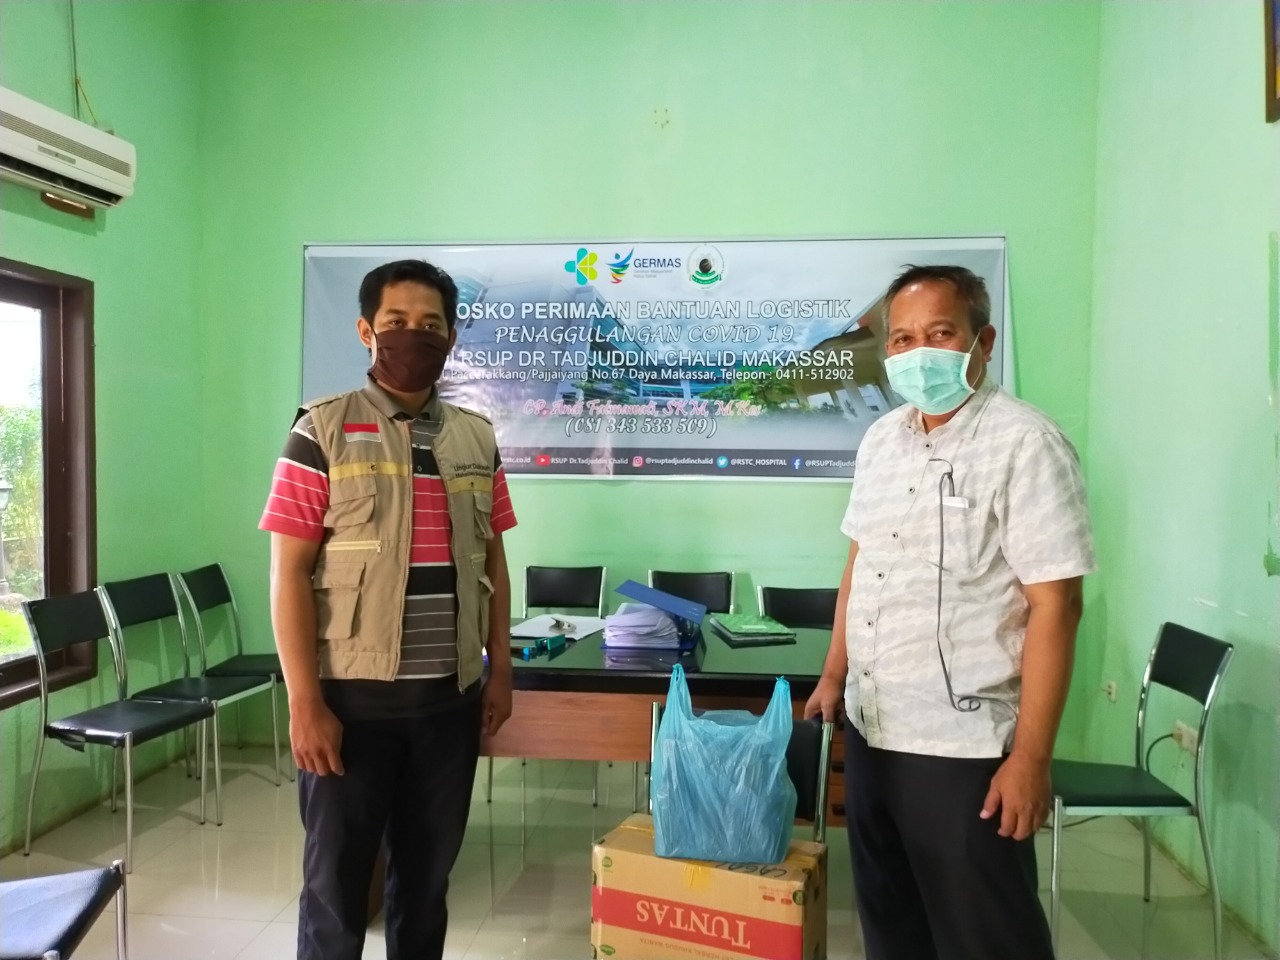 Foto PP Lidmi menyalurkan Bantuan paket Alat Pelindung Diri (APD) kepada tenaga Kesehatan di Rumah Sakit Dr. Tadjuddin Chalid, Jl. Paccerakkang No.67, Kota Makassar, Sulawesi Selatan, Rabu (29/04/2020).